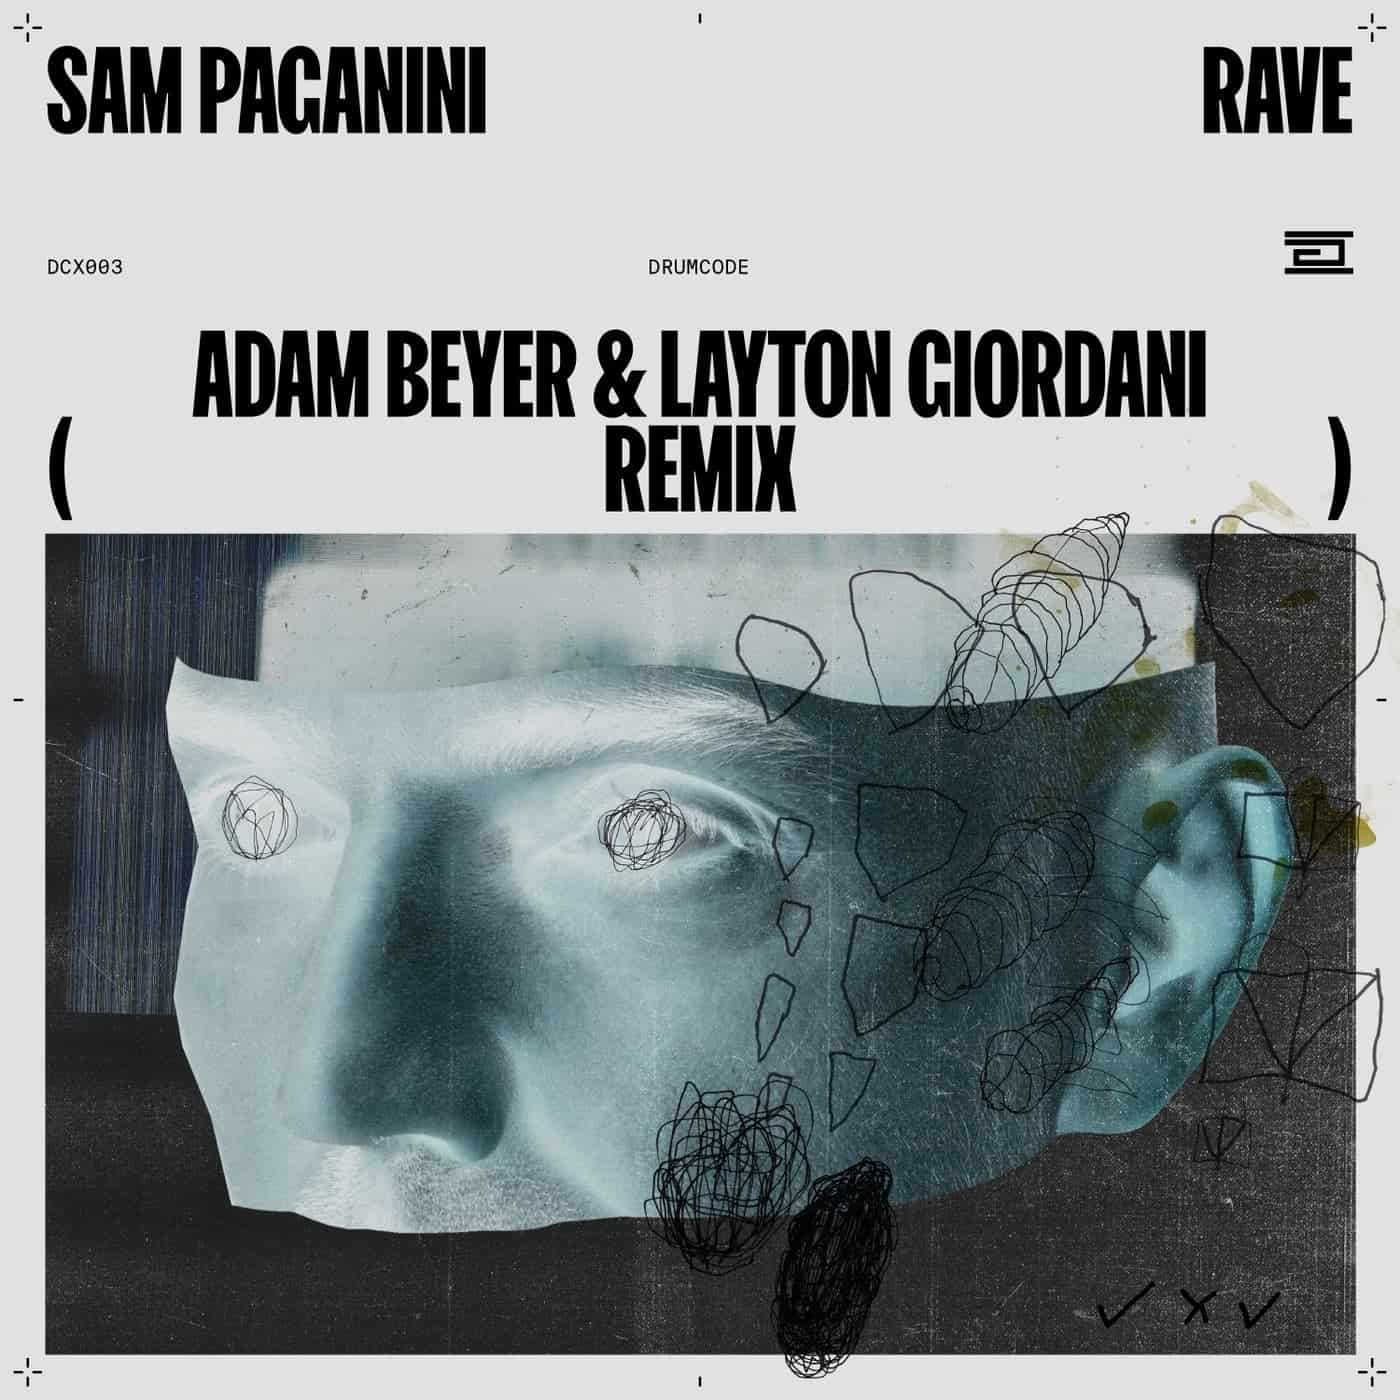 image cover: Sam Paganini - Rave (Adam Beyer & Layon Giordani Remix) / DCX003